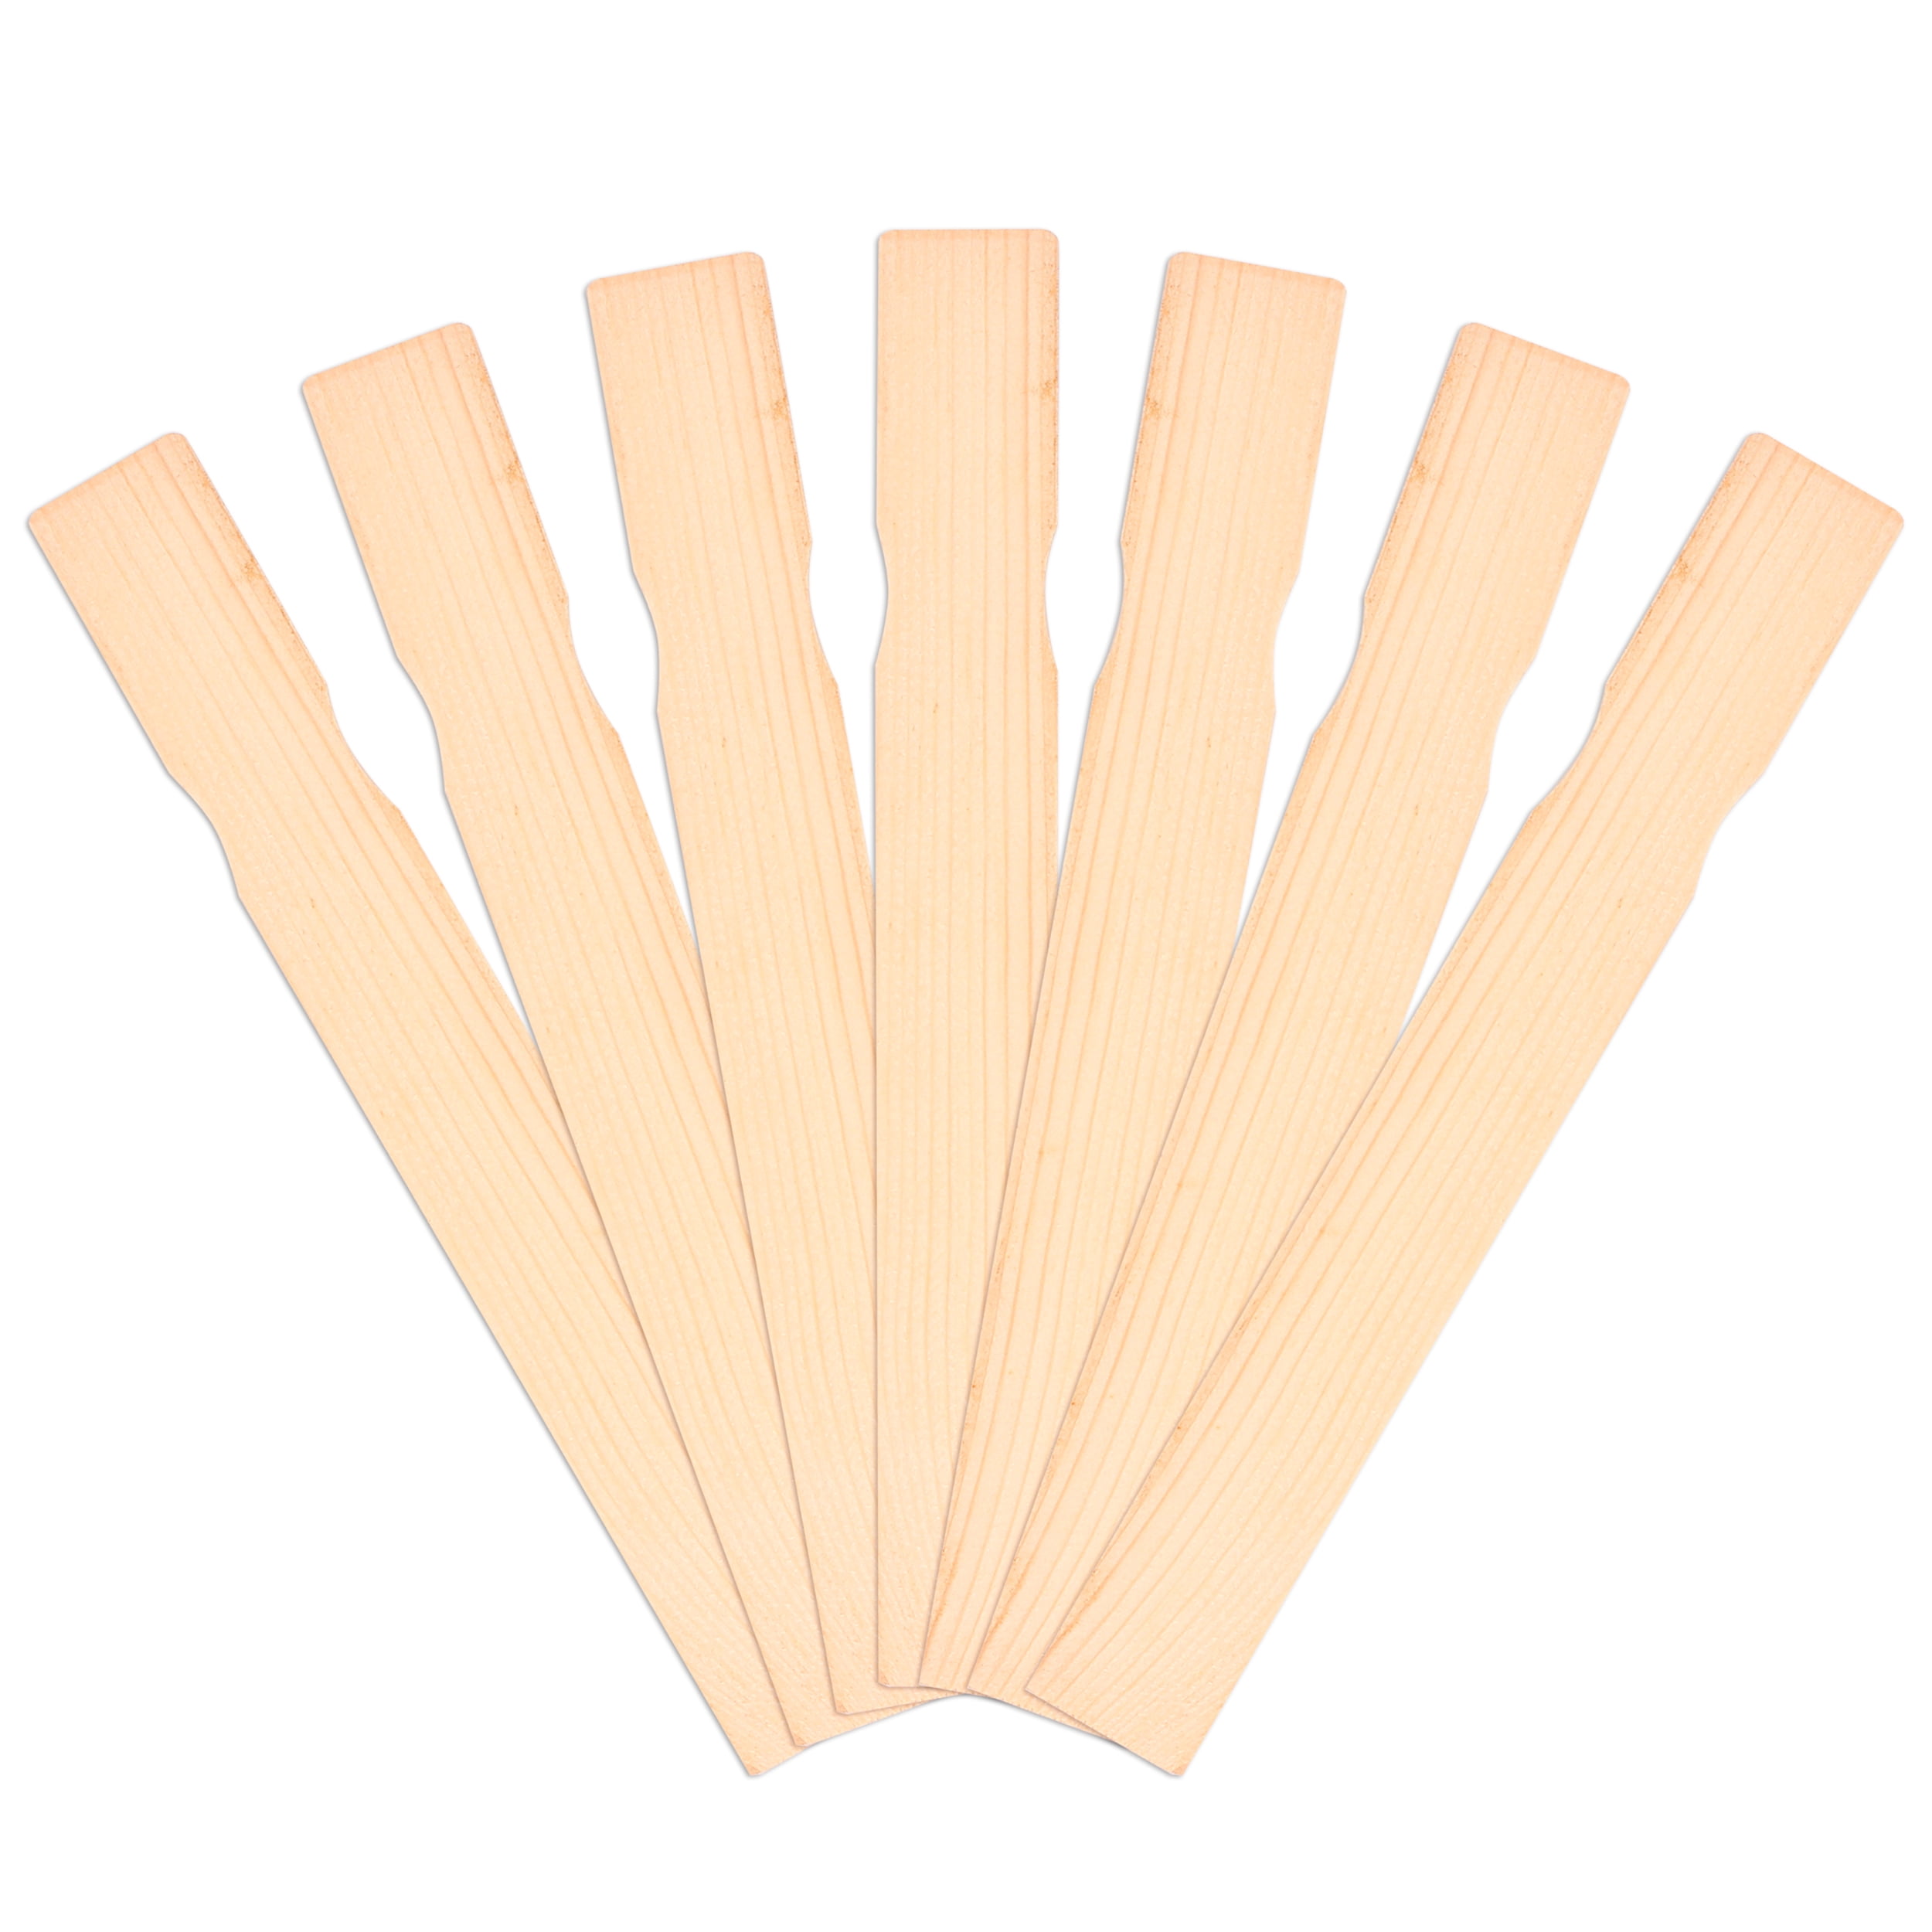 Amkoskr Paint Sticks,Wooden Paint Stir Sticks 10 Inch,Kids Paint Mix  Sticks,Pack of 50,Natural